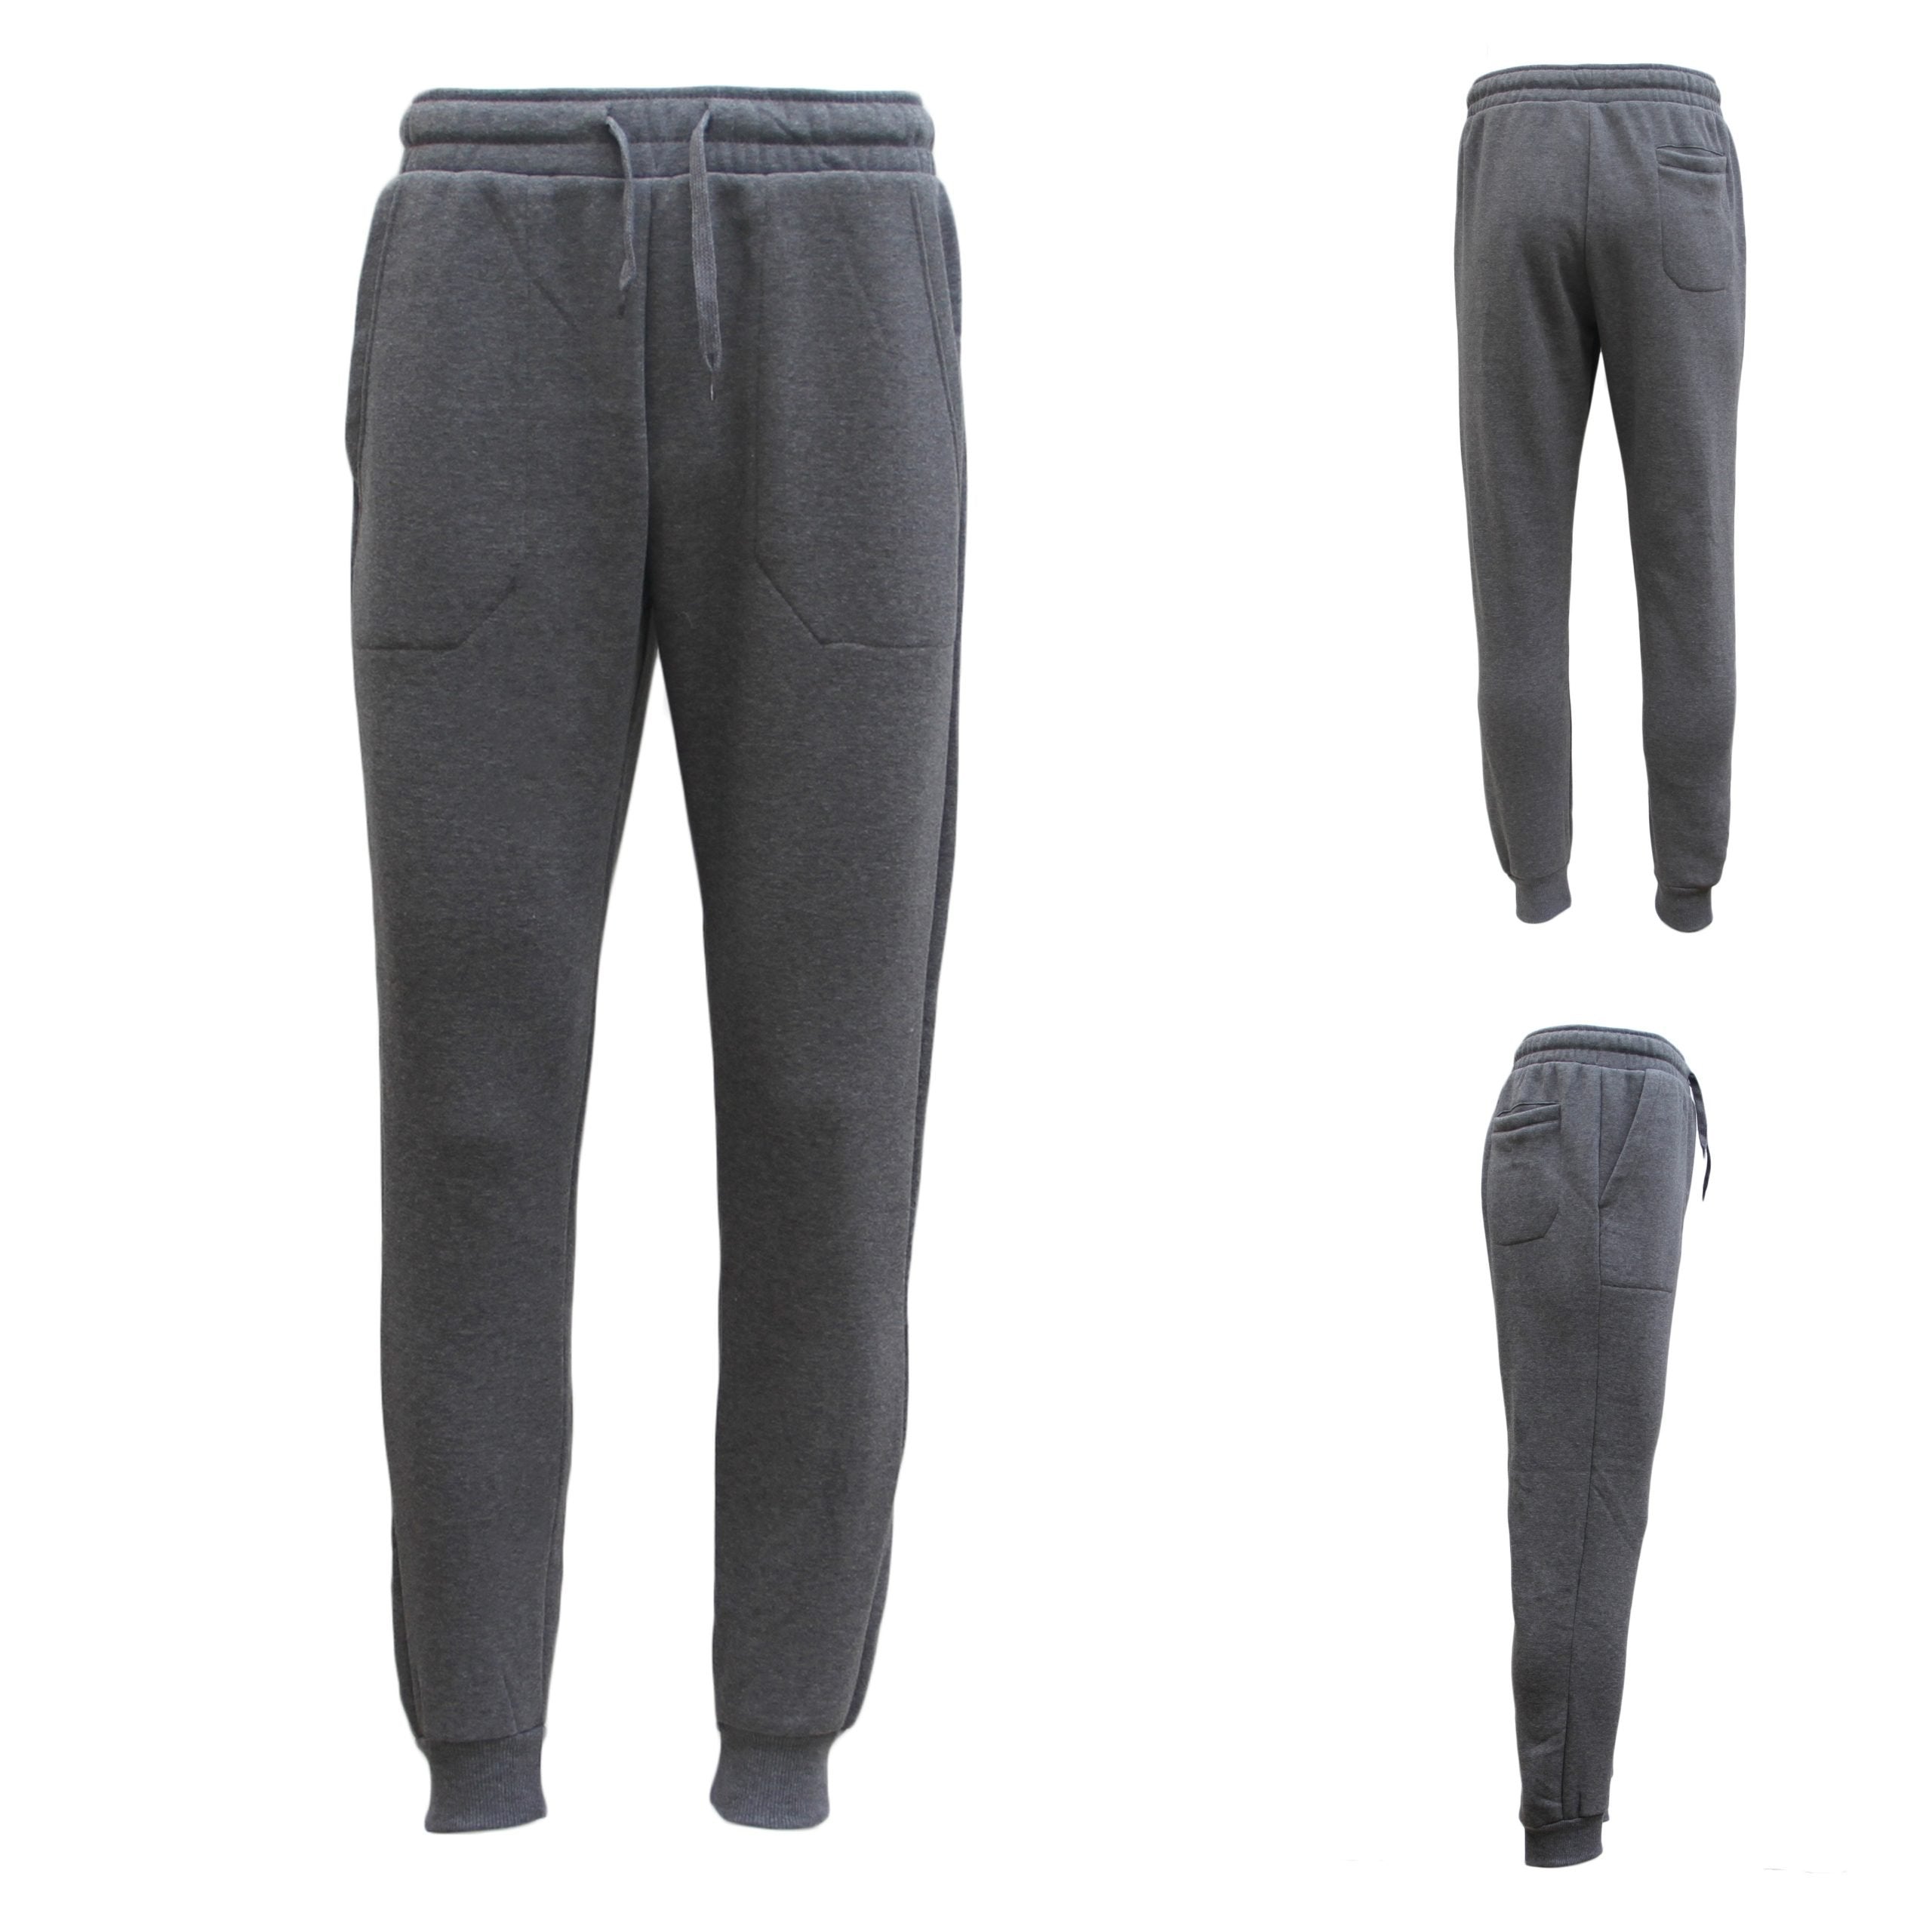 Mens Unisex Fleece Lined Sweat Track Pants Suit Casual Trackies Slim Cuff XS-6XL, Dark Grey, M